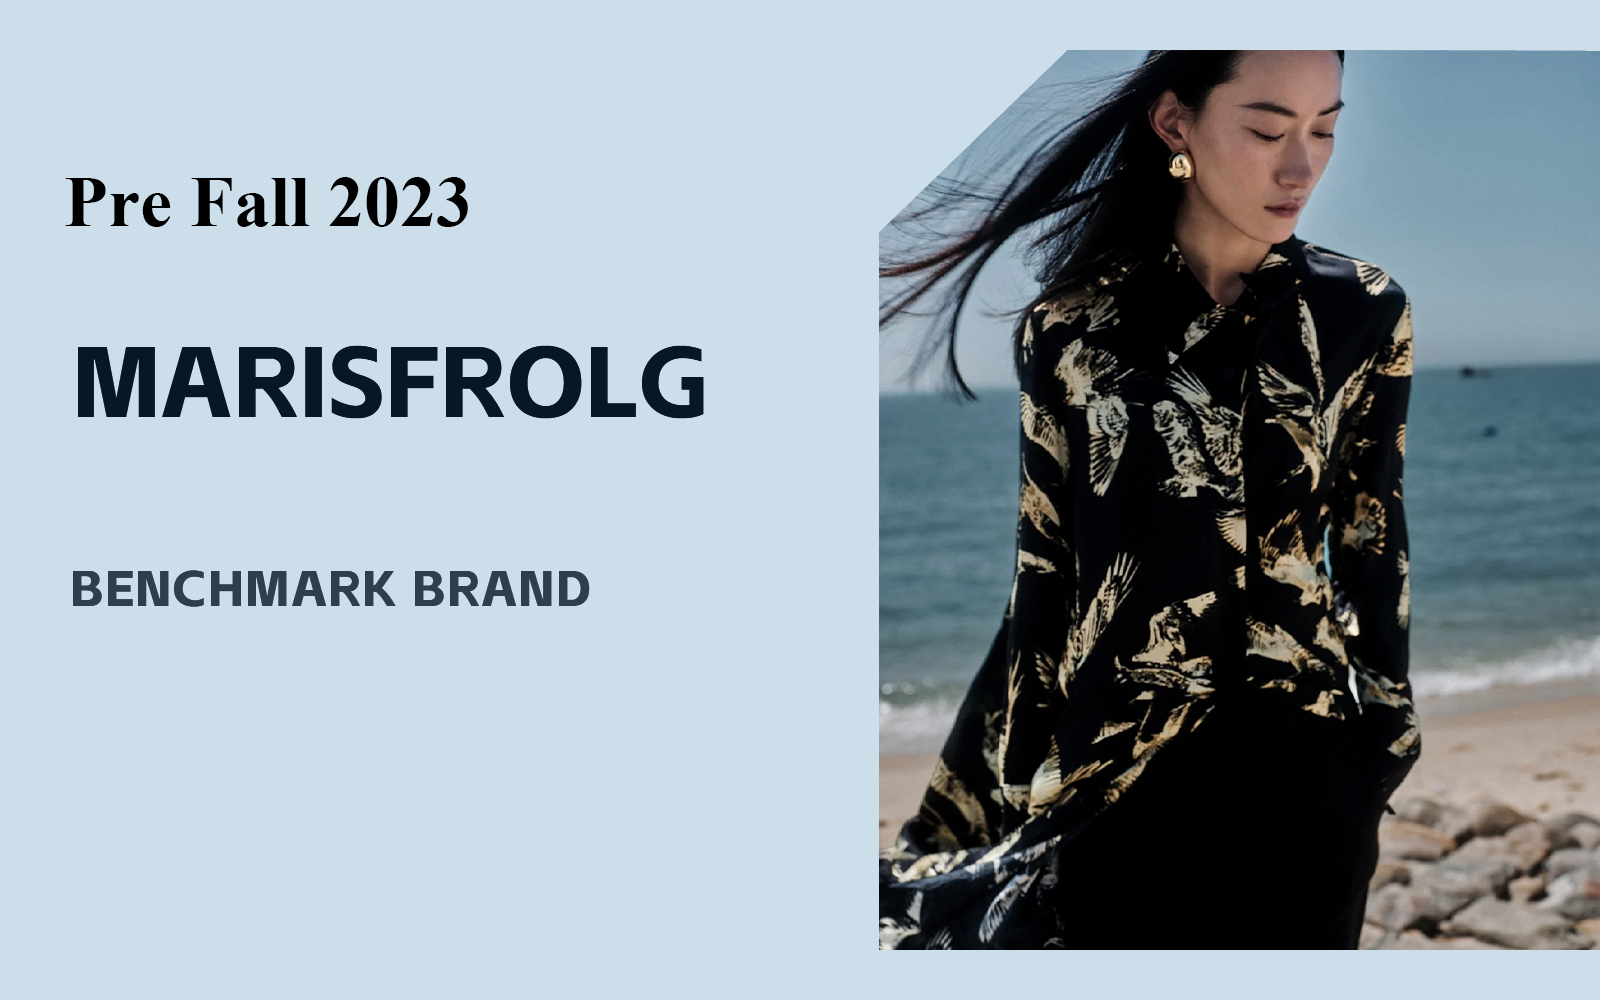 Free Shadows -- The Analysis of Marisfrolg The Benchmark Womenswear Brand